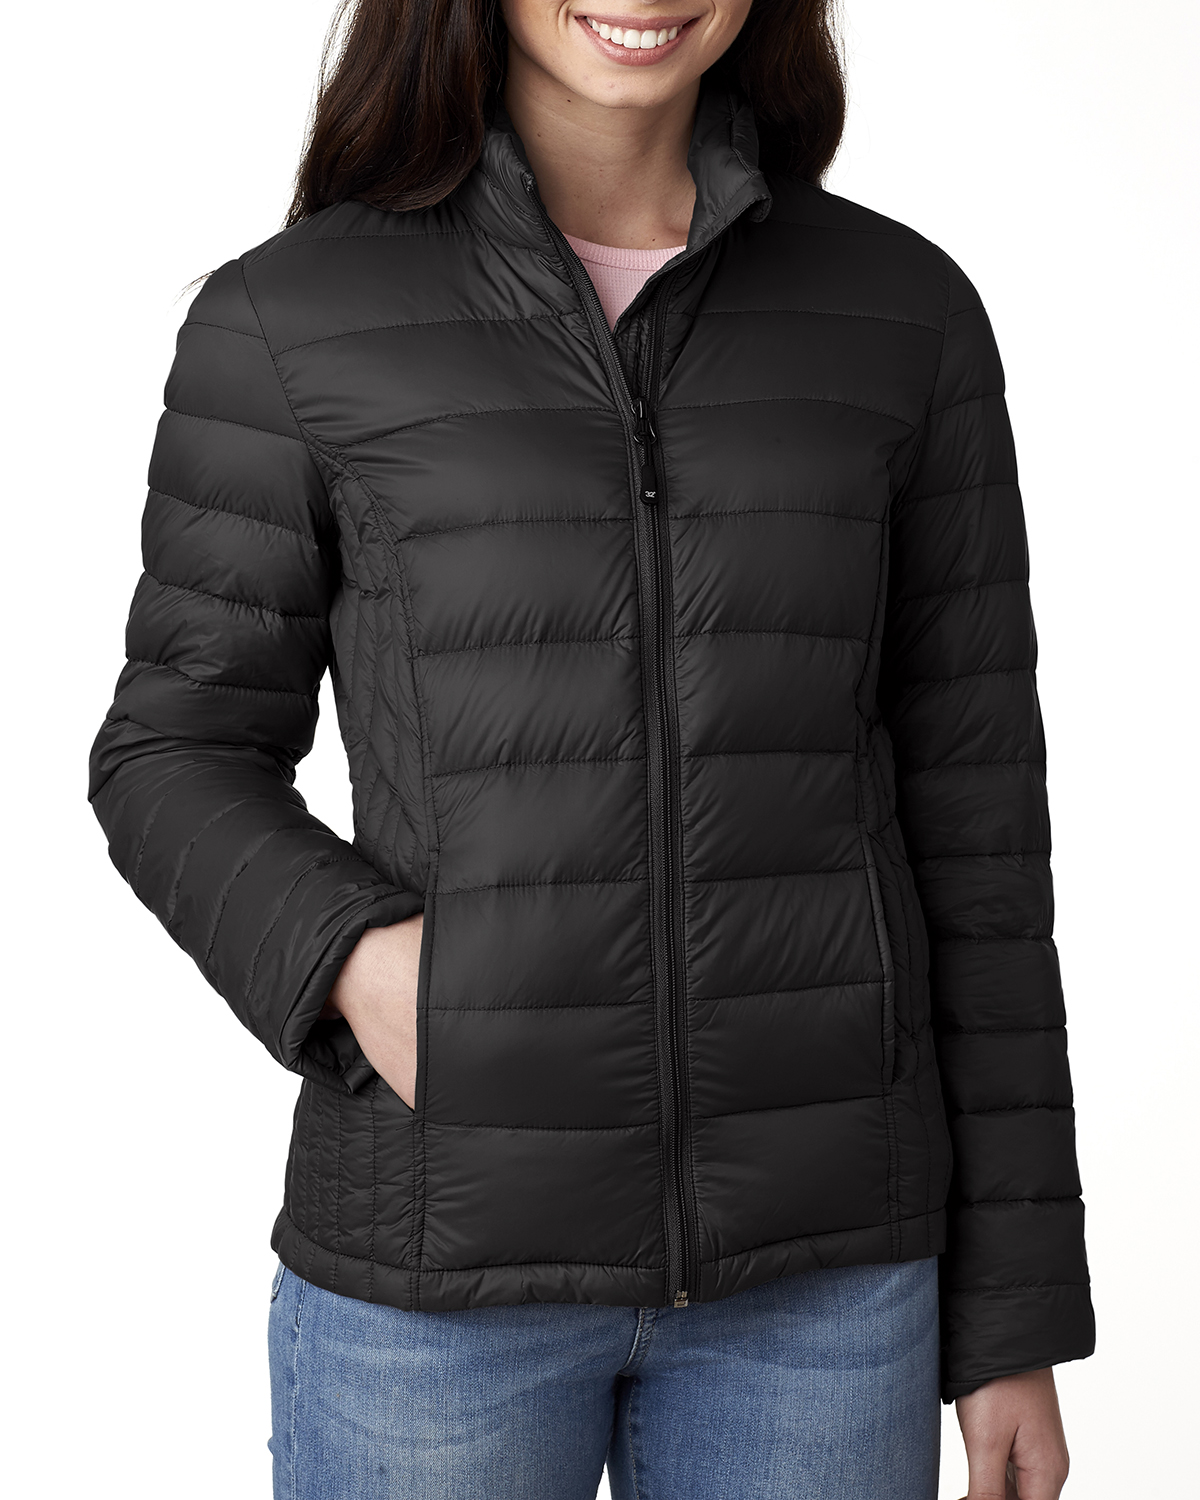 Weatherproof 15600W - Ladies' Packable Down Jacket $53.23 - Women's